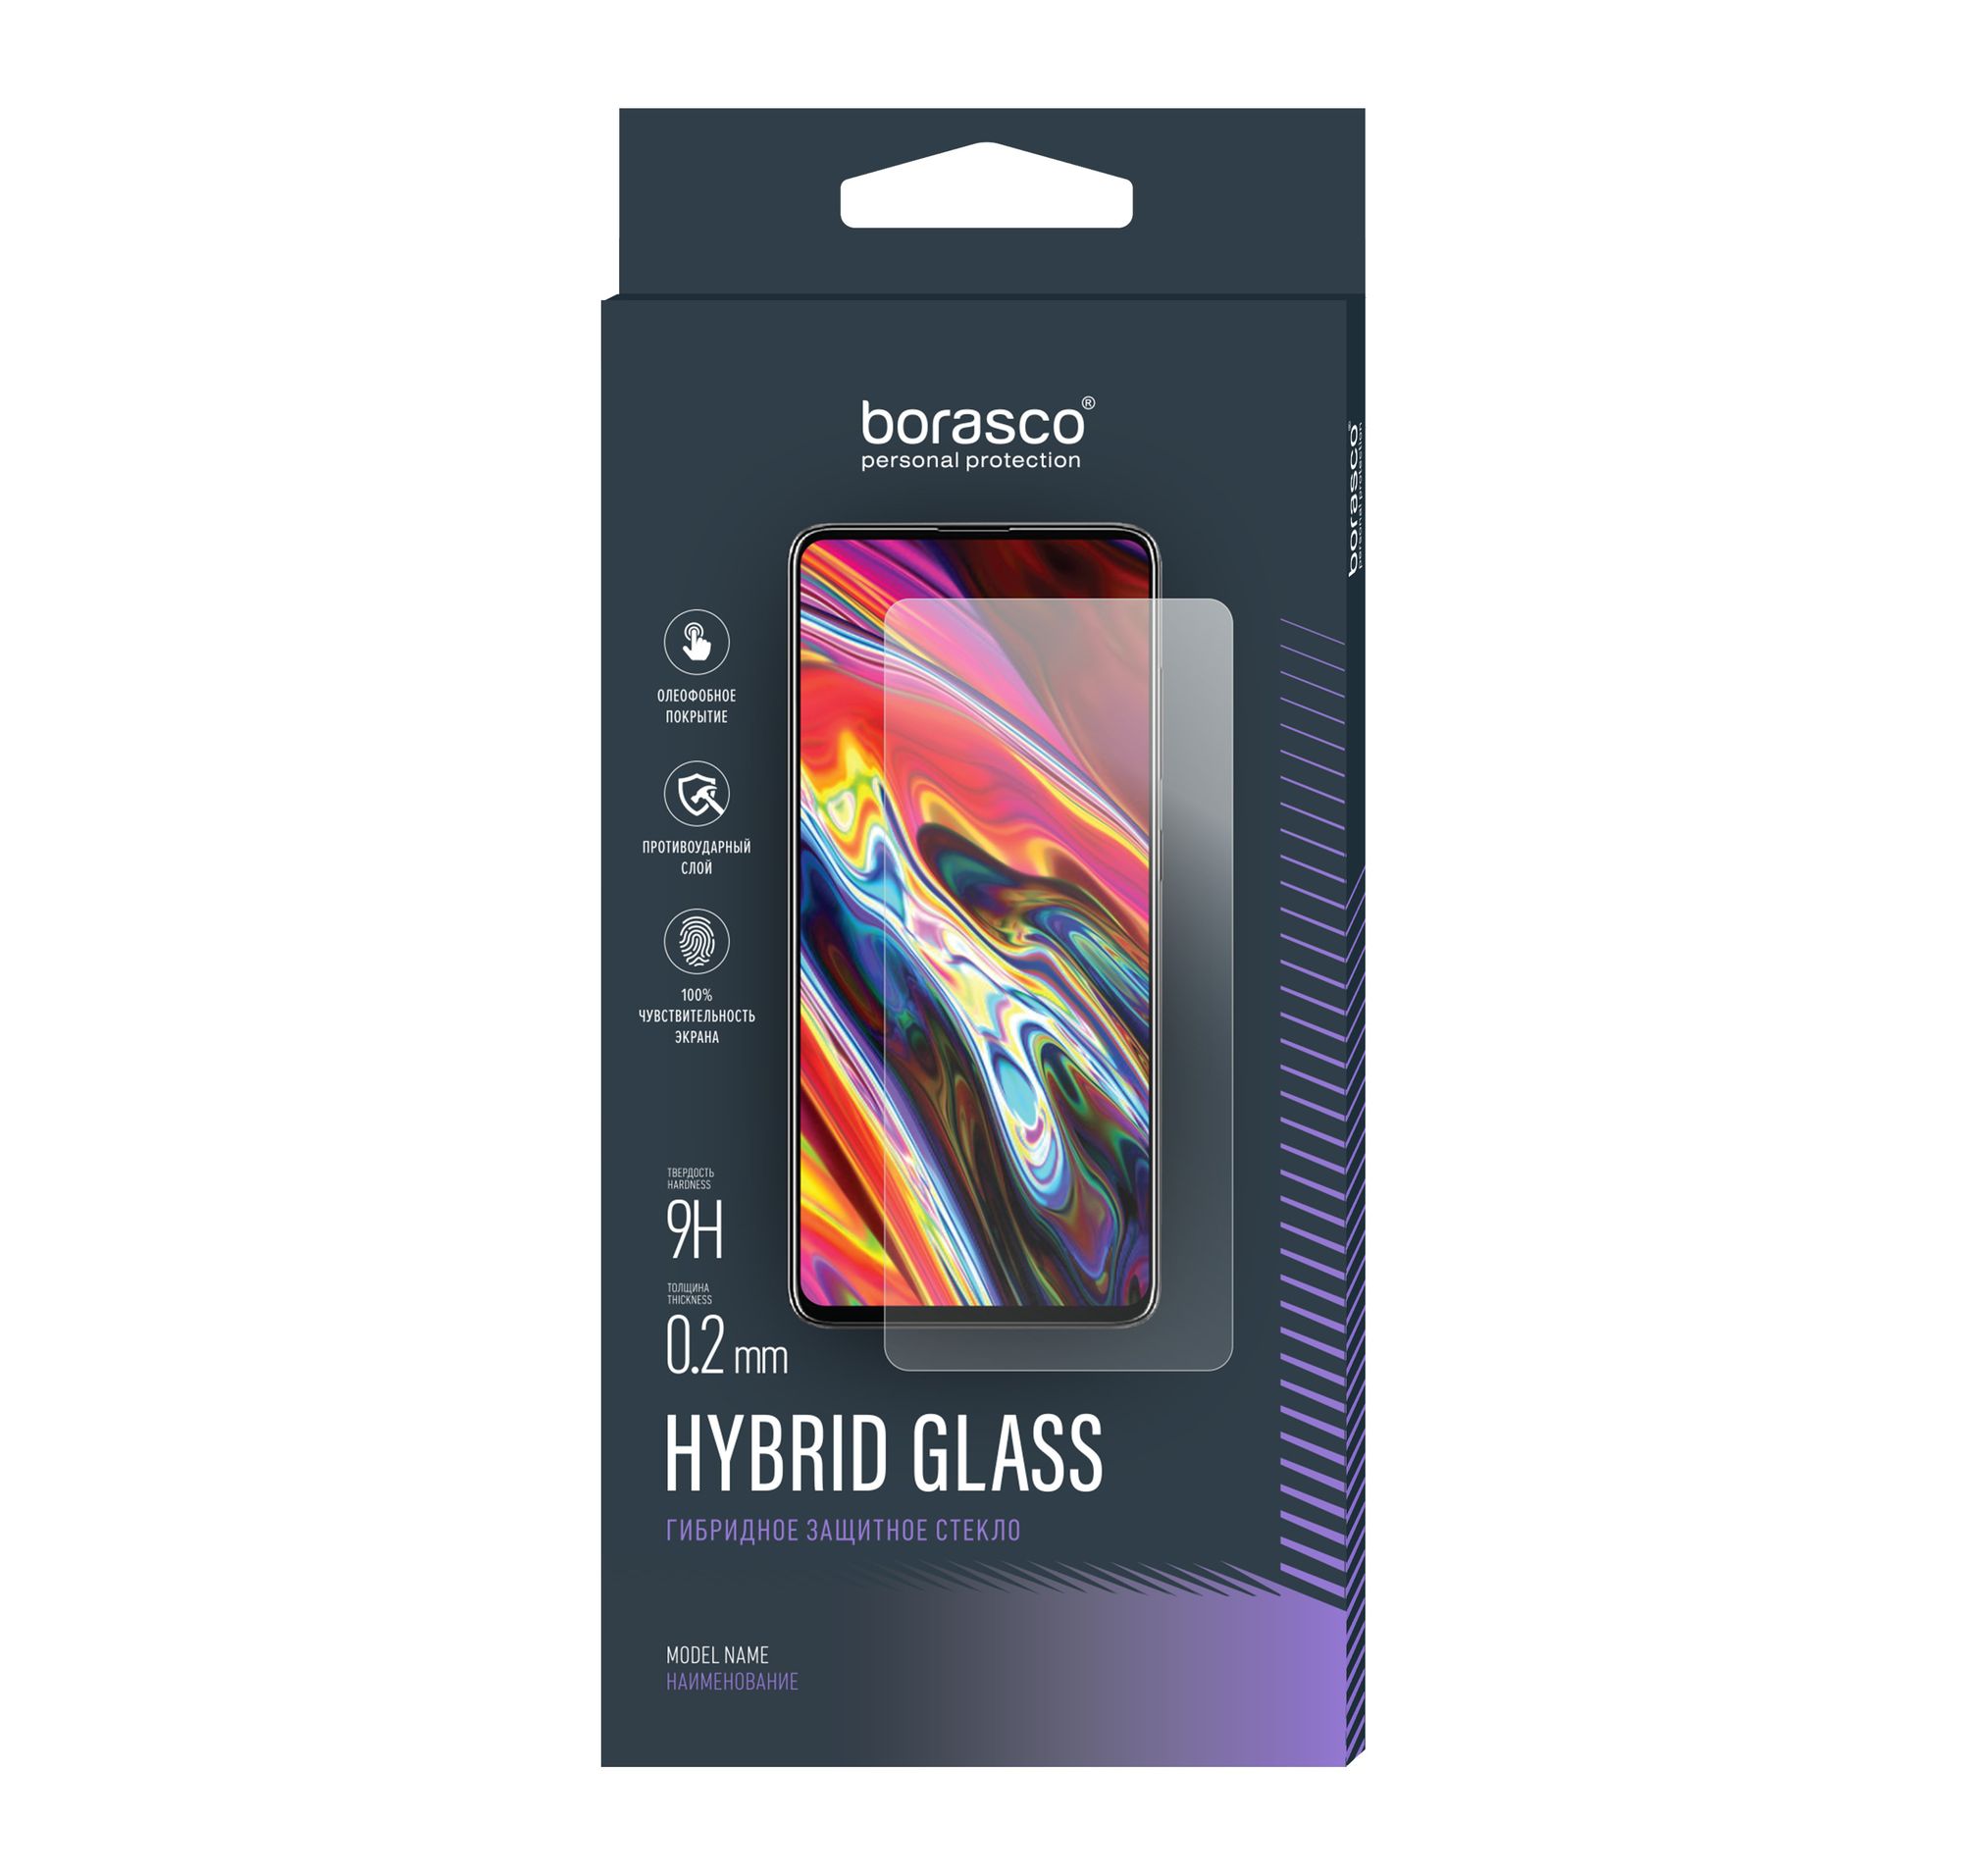 Стекло защитное Hybrid Glass VSP 0,26 мм для Sony Xperia X стекло модуля для sony f5121 xperia x f5122 xperia x dual f8131 xperia x perfomance f8132 xperia x perfomance dual белый aa